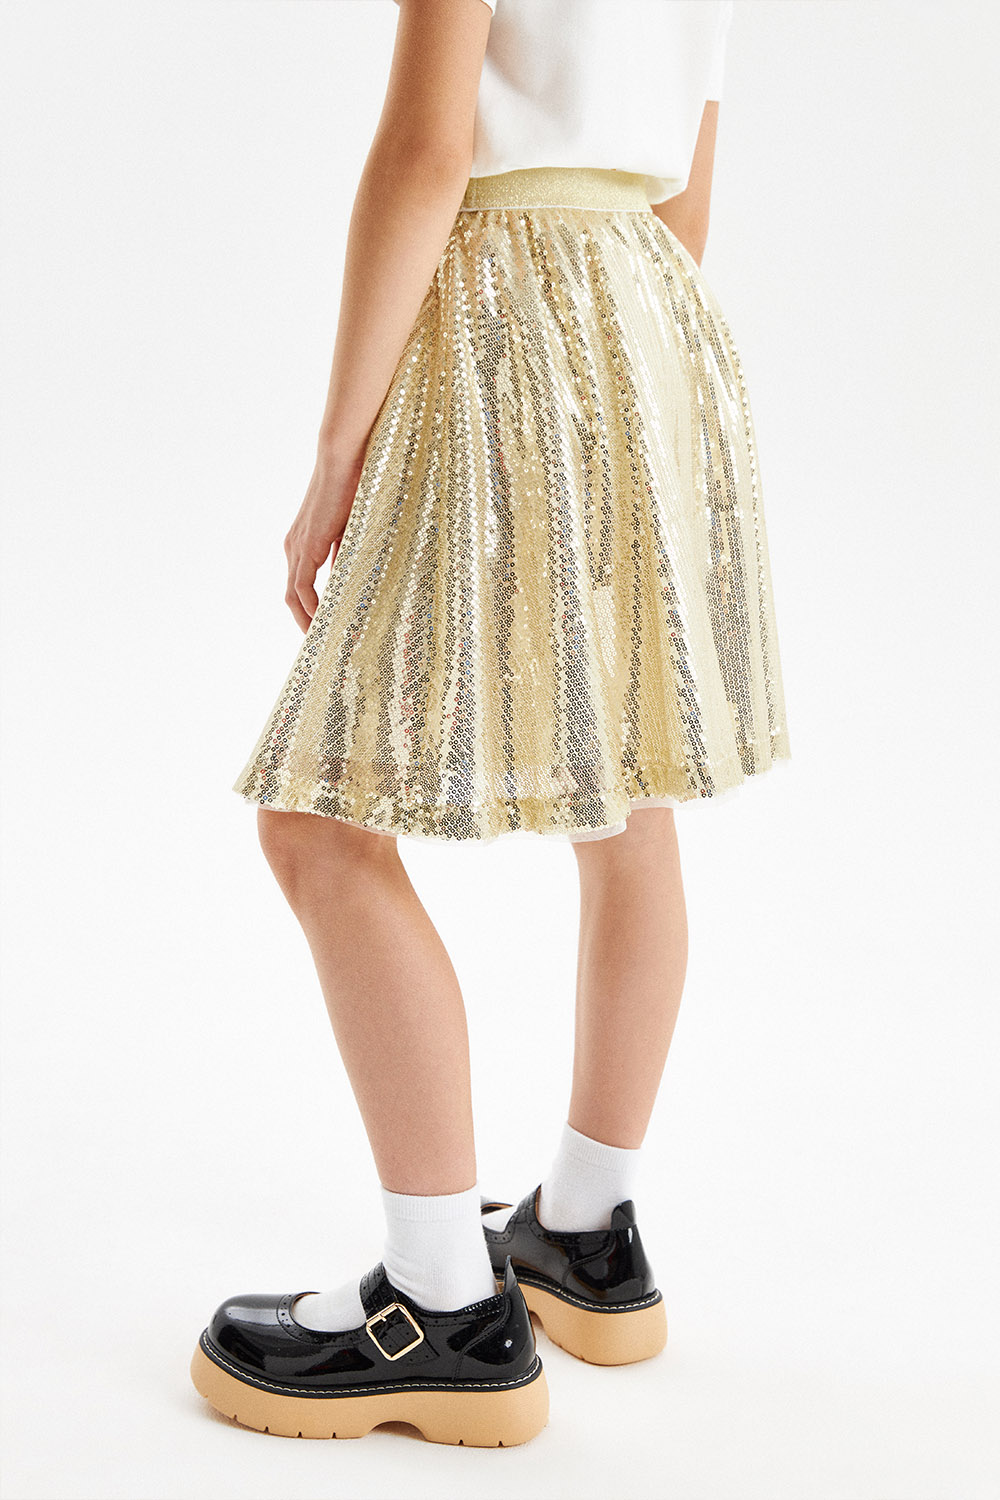 Золотая юбка с пайетками (SNFWG-319-26834-900) Silver spoon